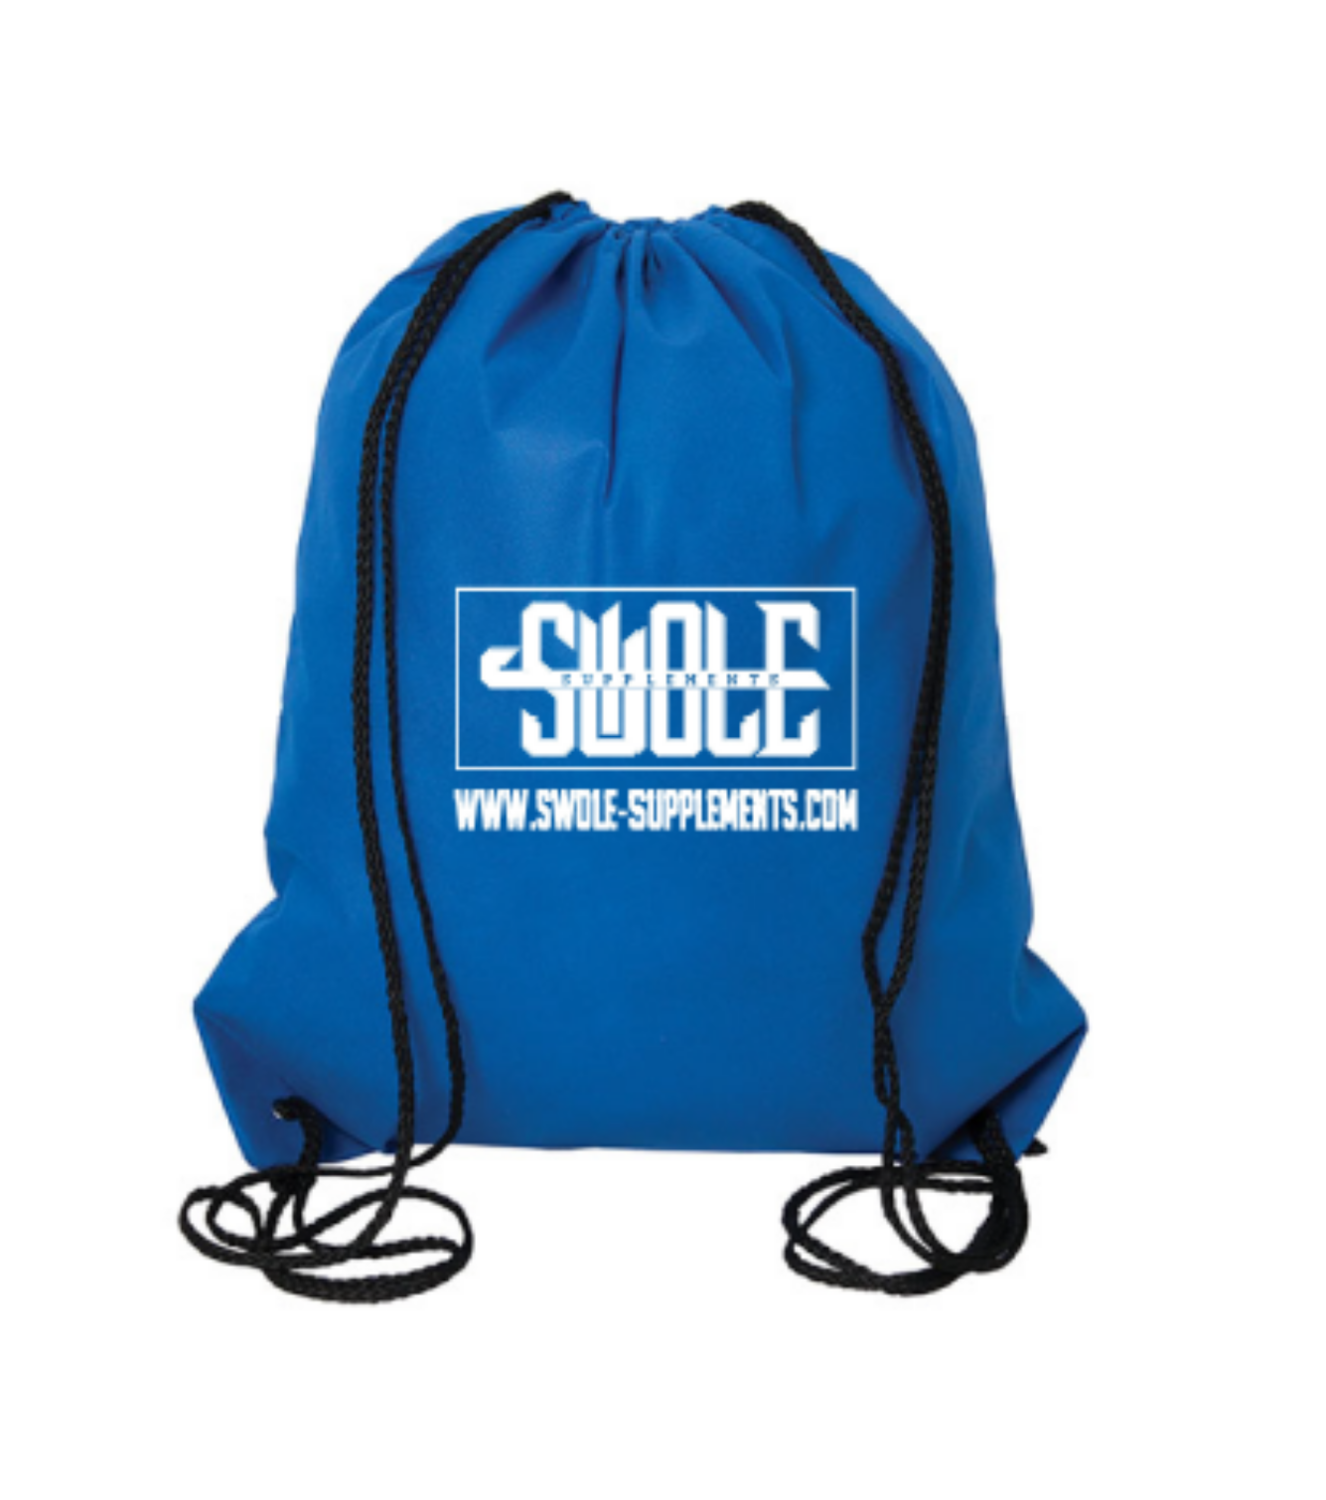 SWOLE SUPPLEMENTS - LARGE DRAWSTRING BAG (BLUE & WHITE)